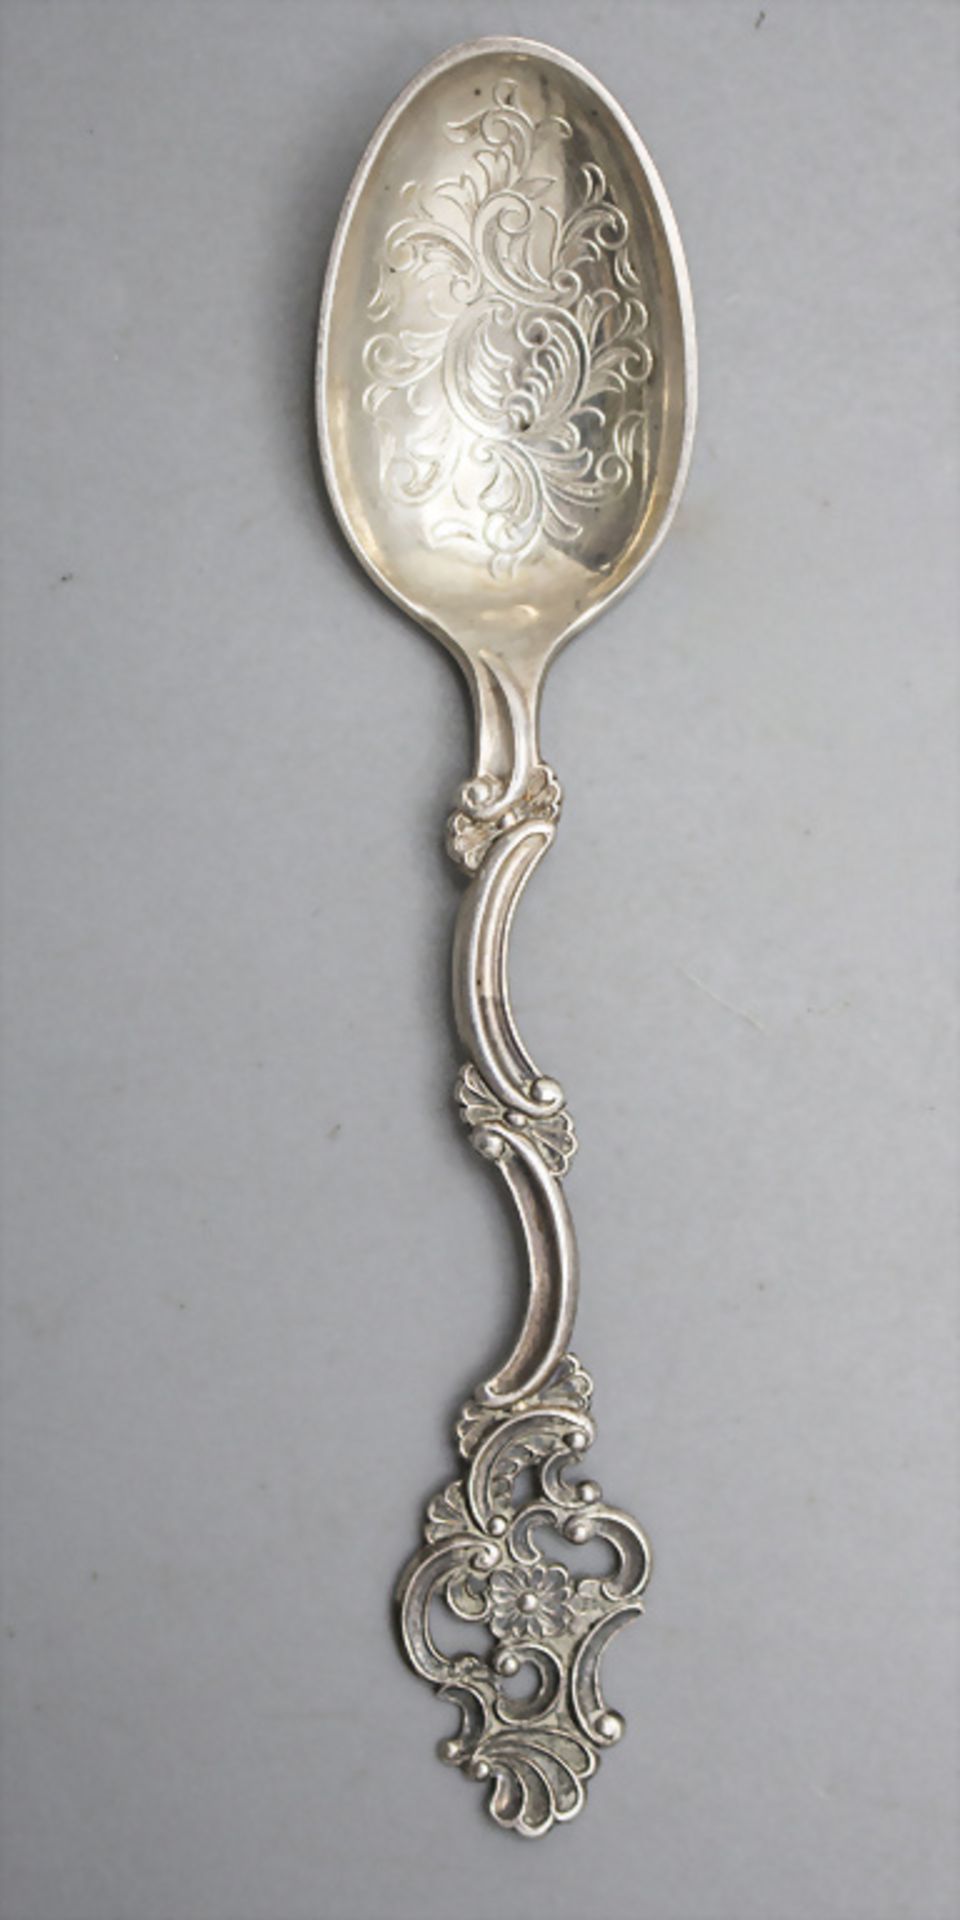 12 Teelöffel 'Fancy' / 12 silver tea spoons 'Fancy', Thorvald Marthinsen, Tonsberg, Norwegen, ... - Image 2 of 3